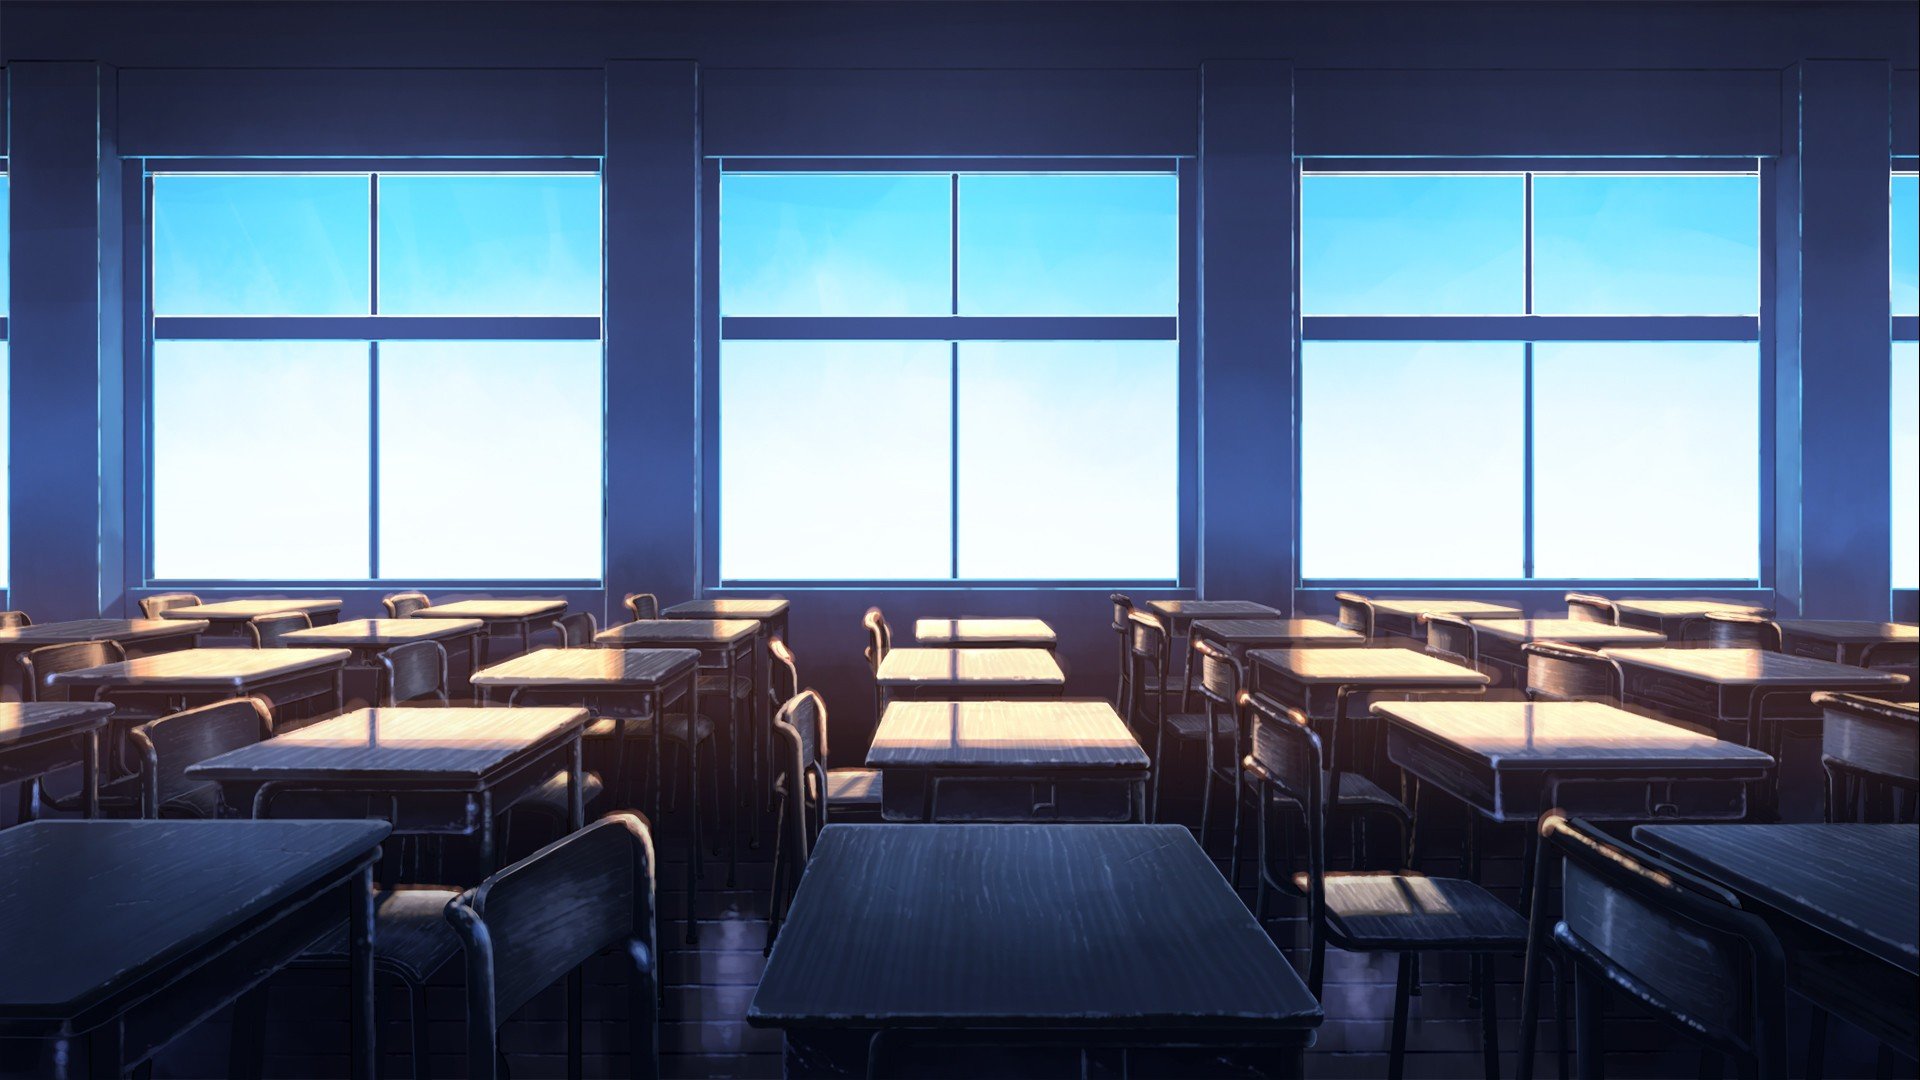 Classroom Night 2d Anime Background Illustration Stock Illustration   Download Image Now  iStock